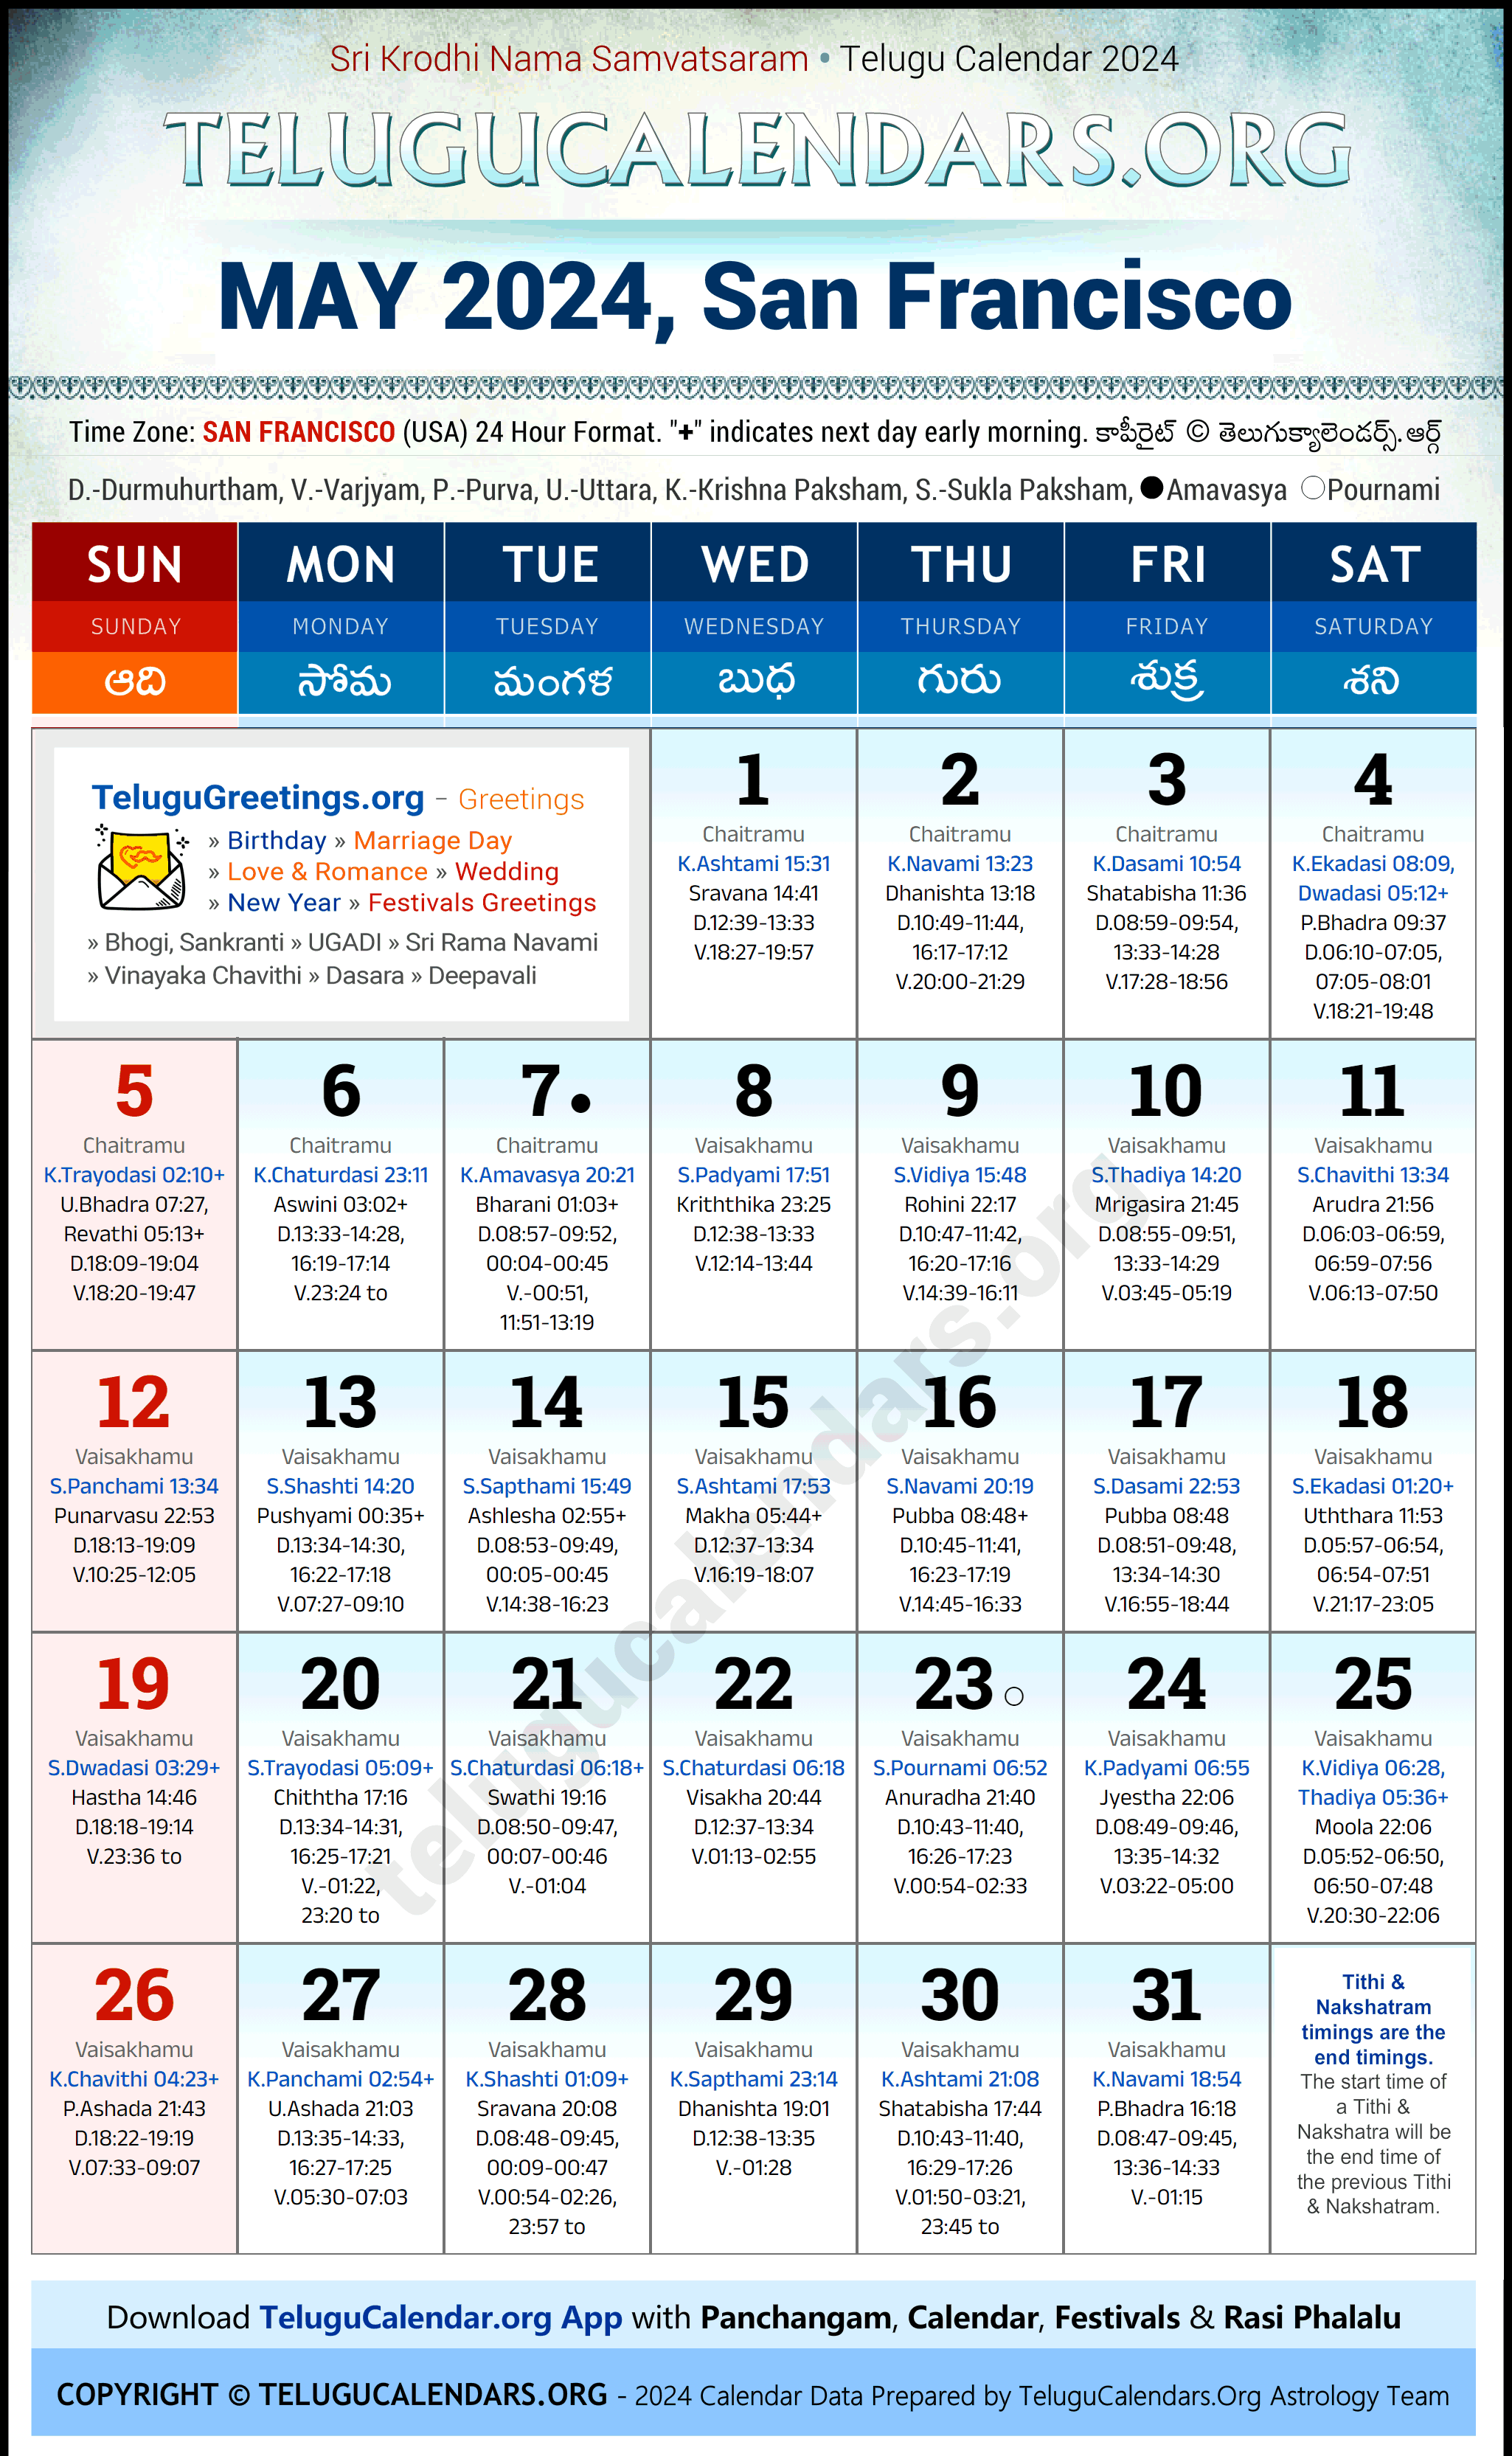 Telugu Calendar 2024 May Festivals for San Francisco